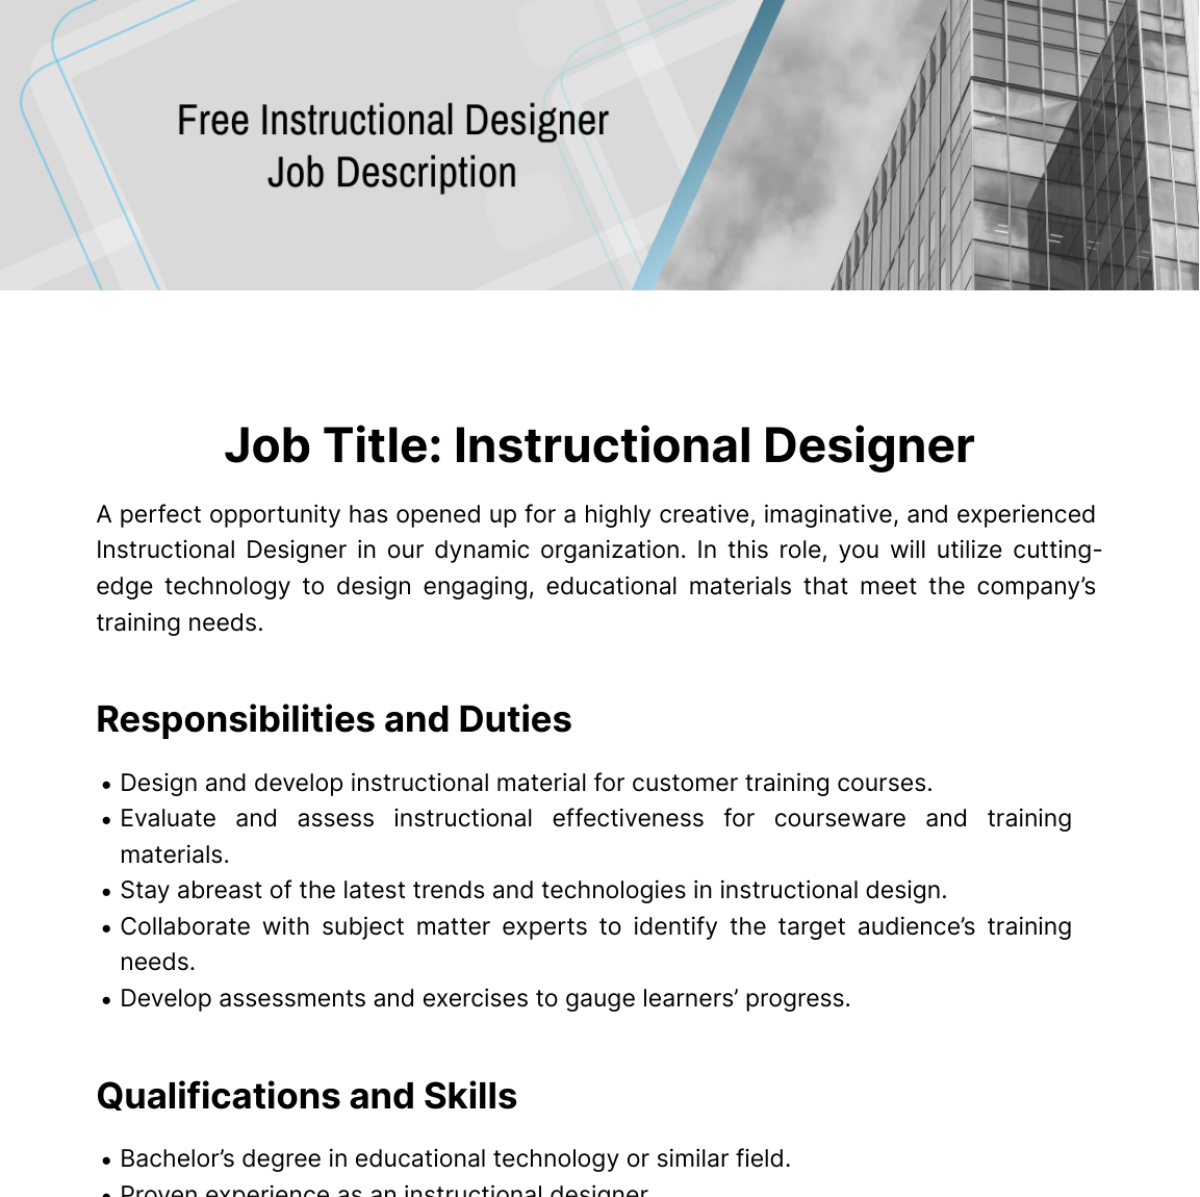 Free Instructional Design Job Description Template